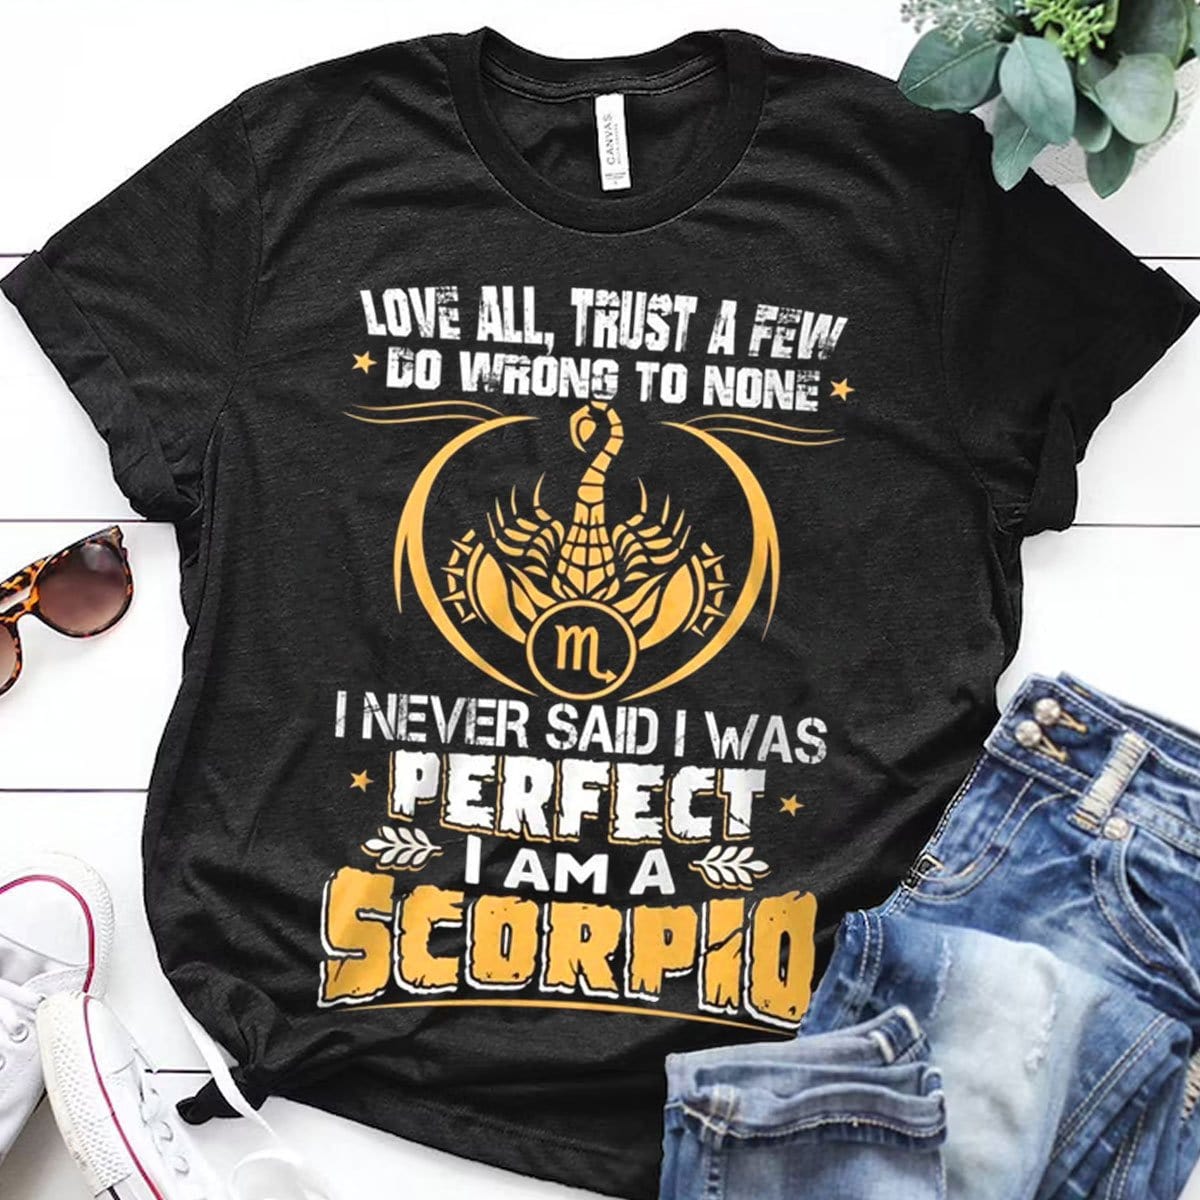 Love All Trust A Few, I'm A Scorpio Shirts